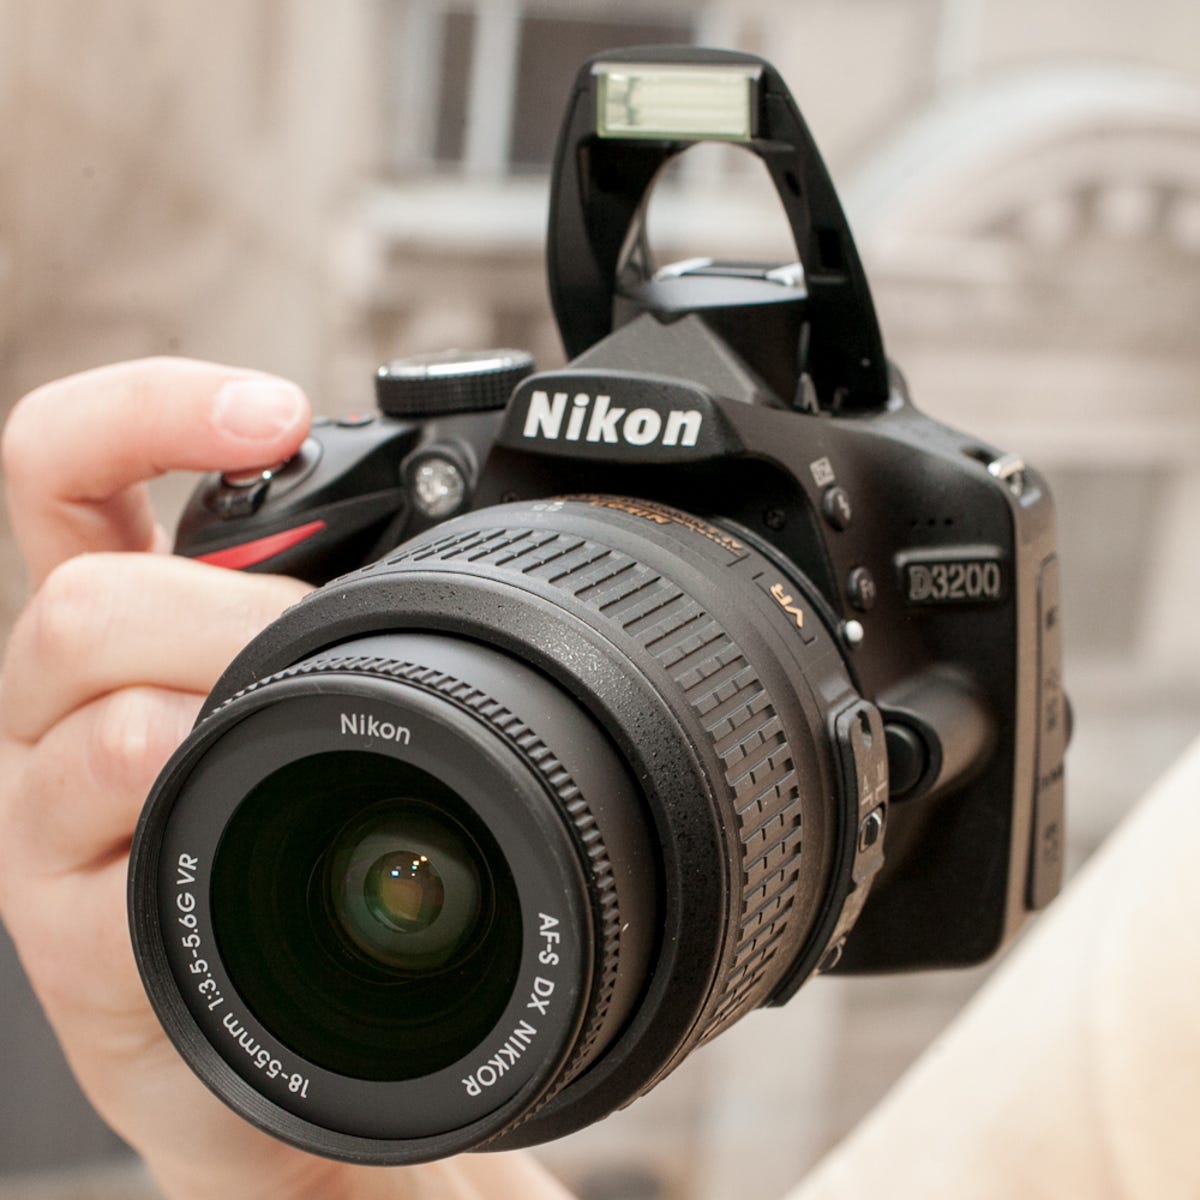 Nikon D3200 (with 18-55mm VR lens) review: Nikon D3200 with 18-55mm VR lens  - CNET